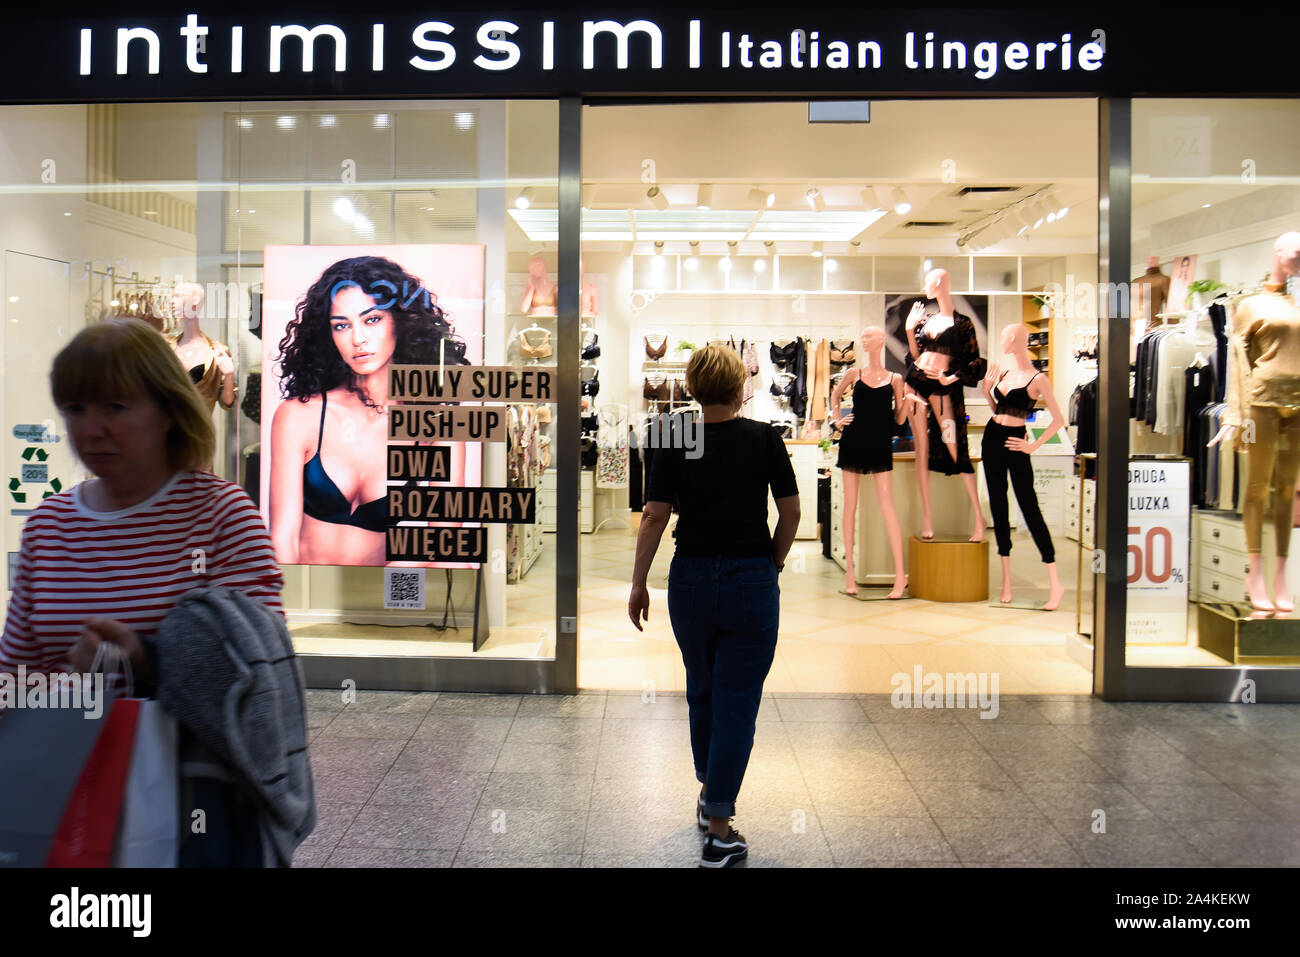 Intimissimi Italian clothing store in Krakow Stock Photo - Alamy